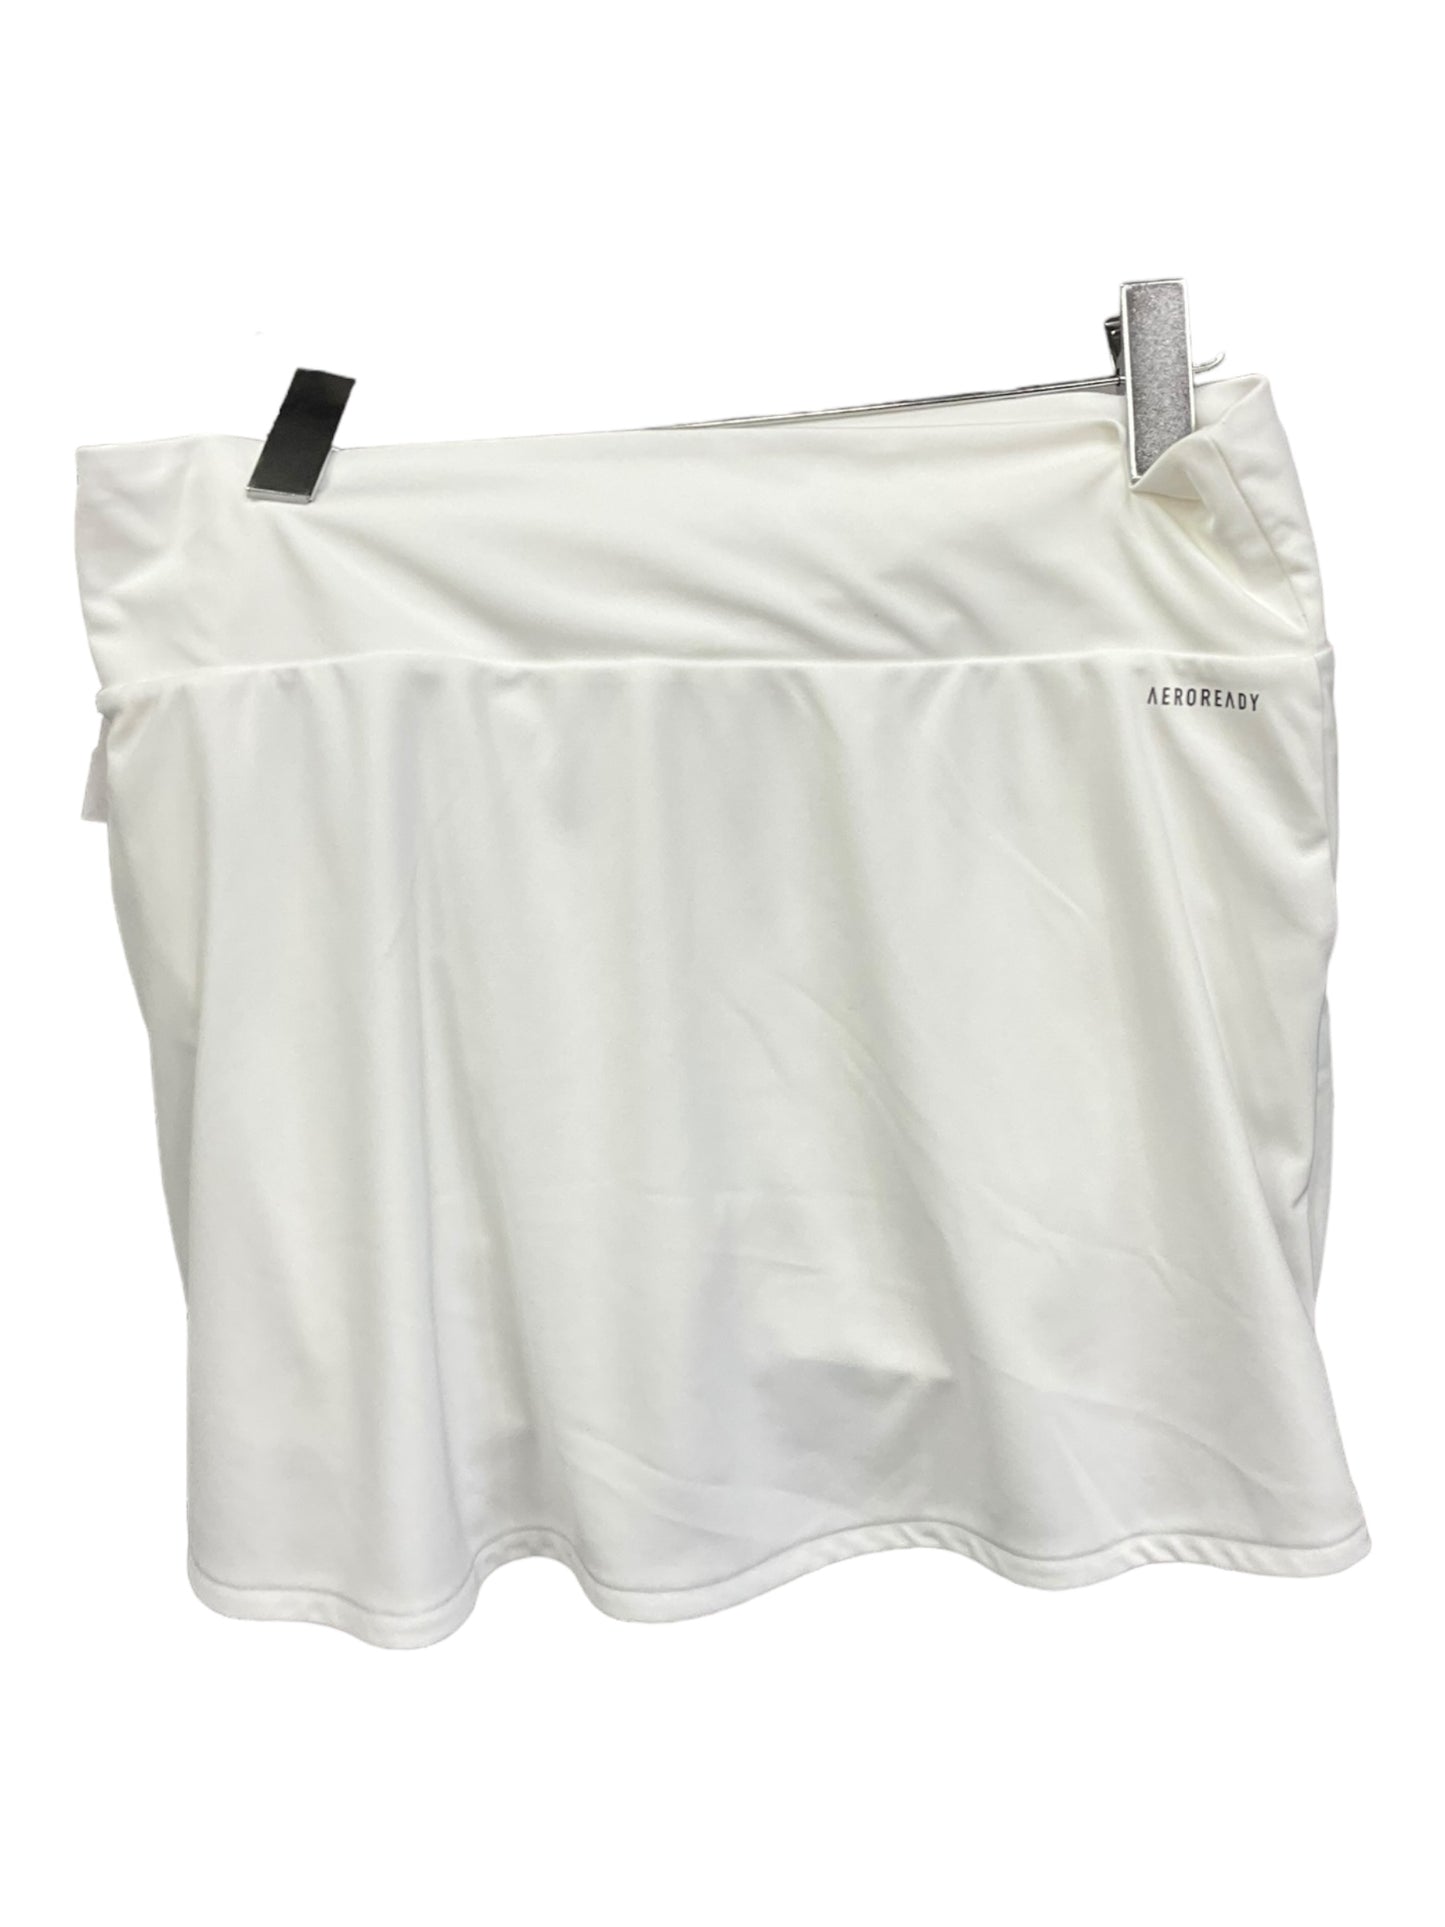 Athletic Skirt Skort By Adidas  Size: L